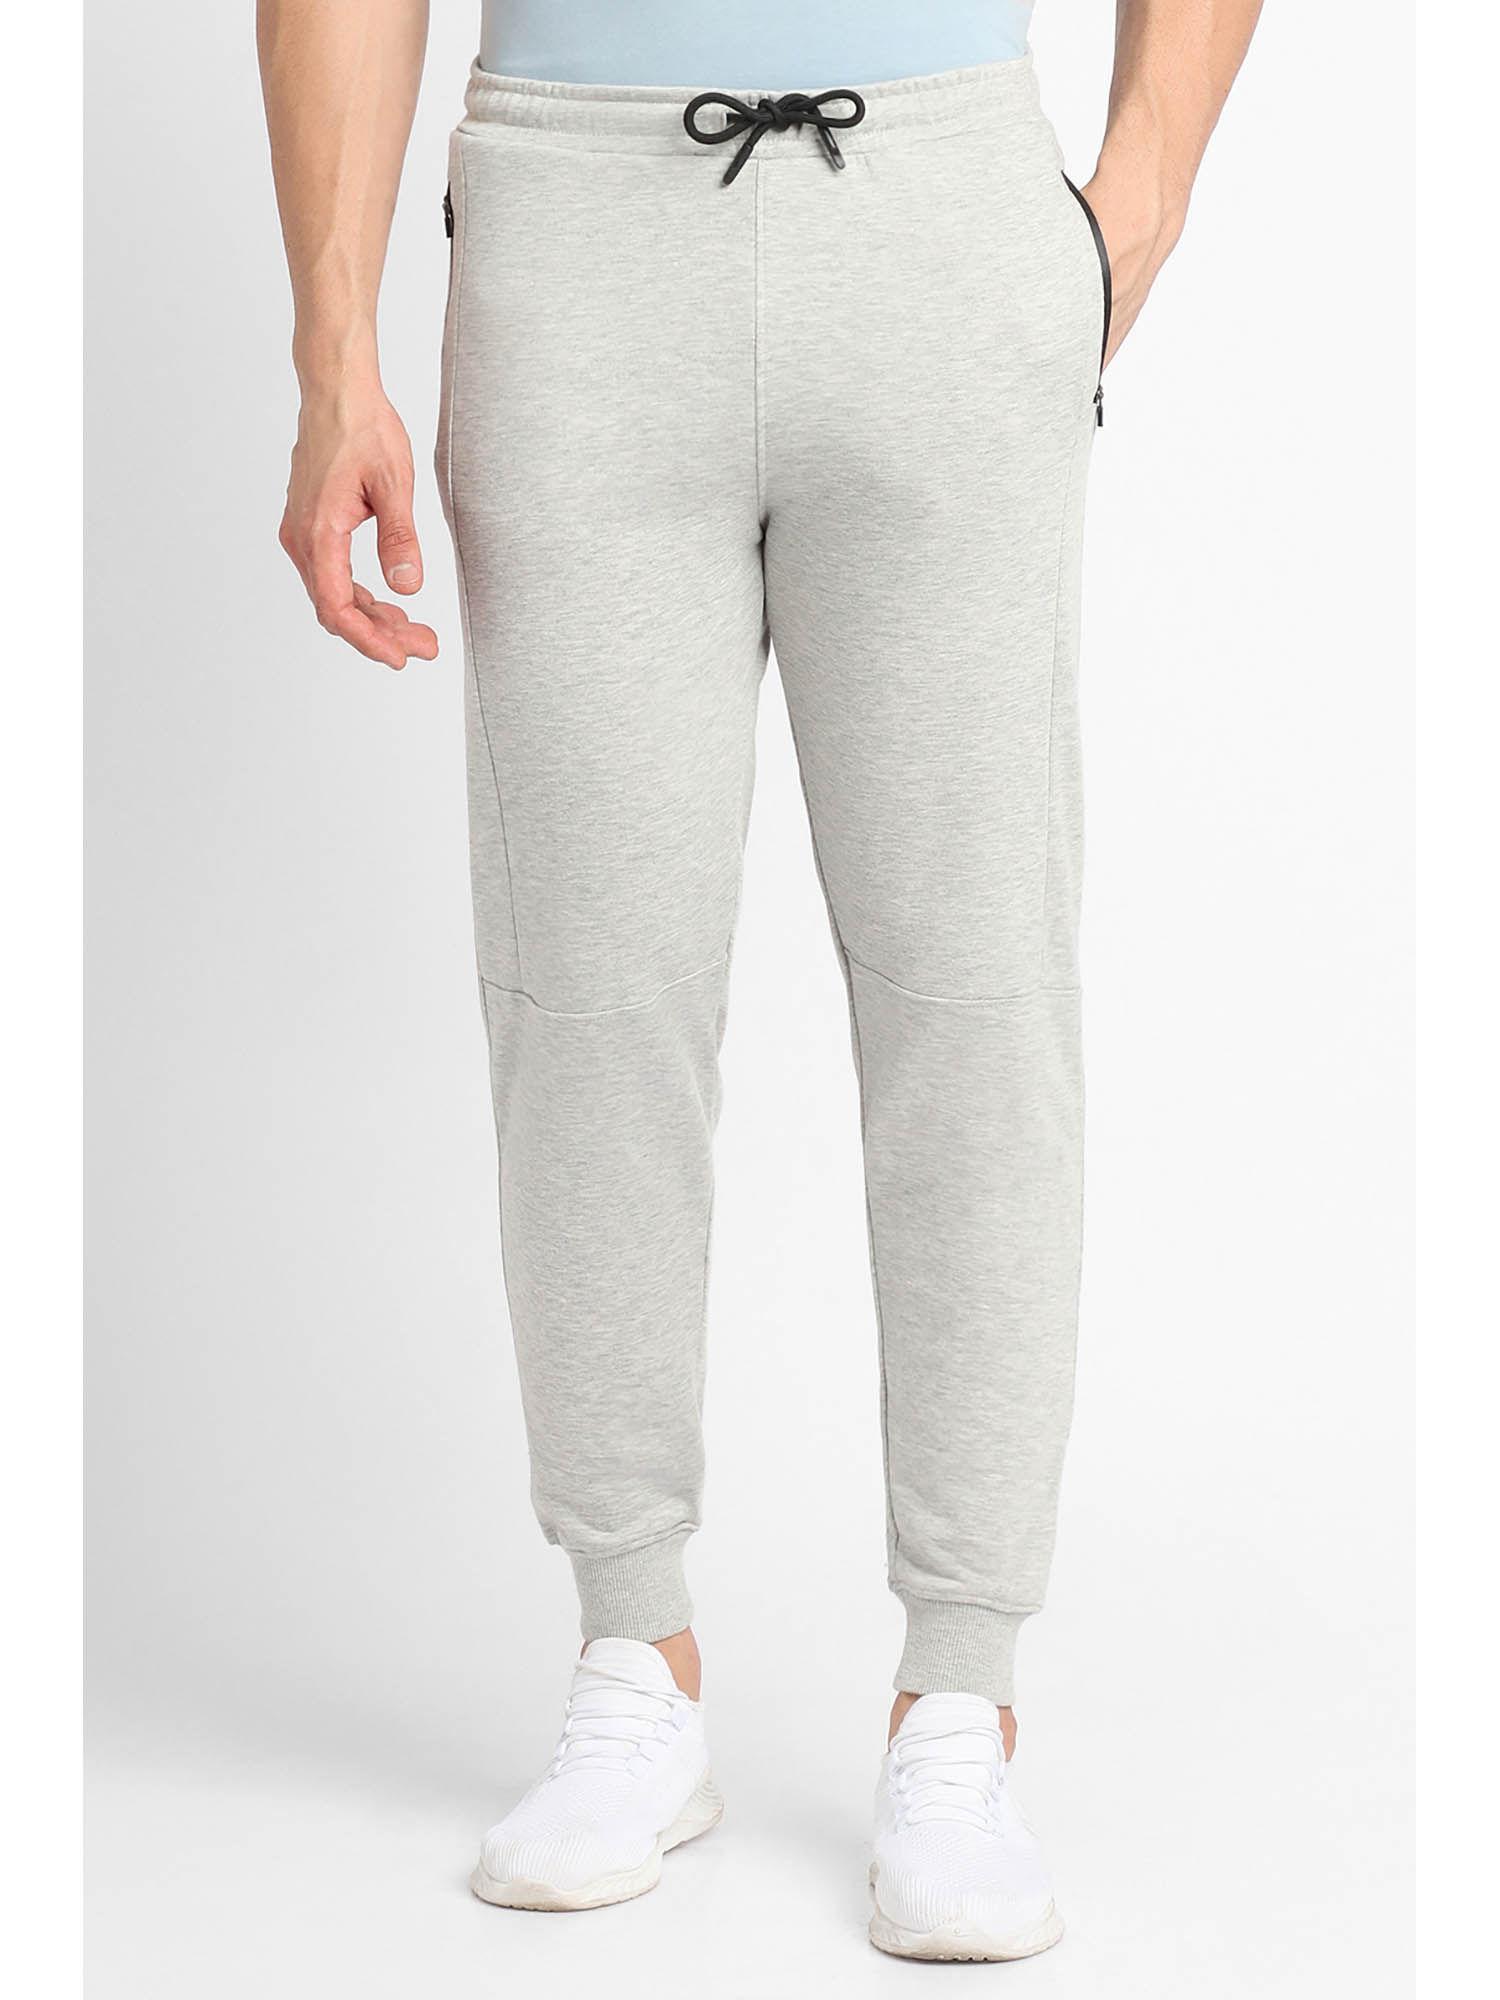 solid grey jogger pants